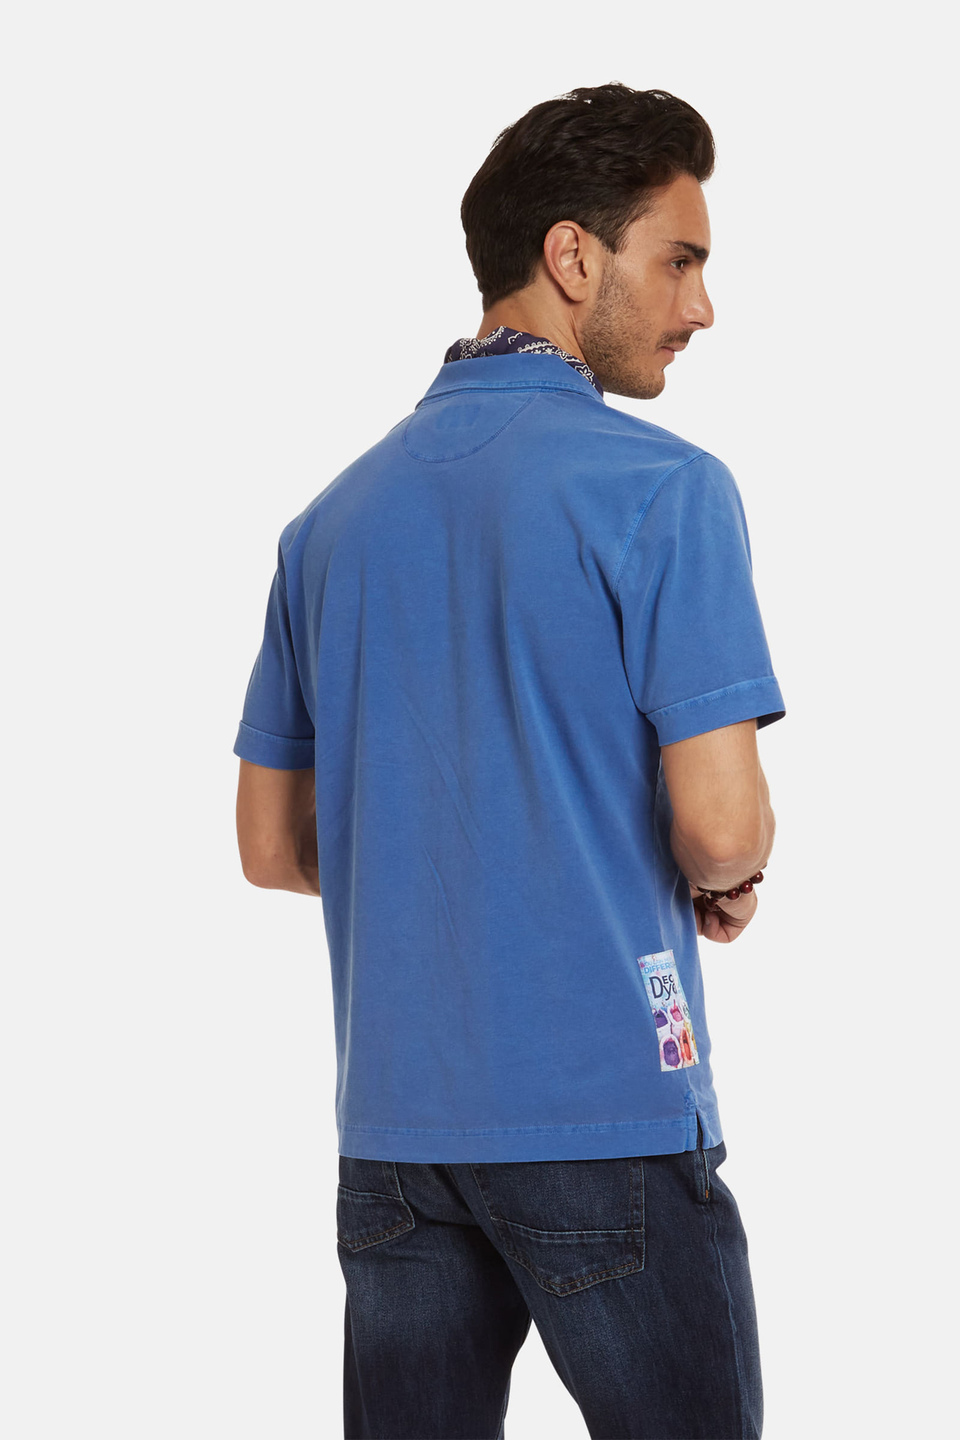 Men's short-sleeved regular-fit cotton polo shirt | La Martina - Official Online Shop